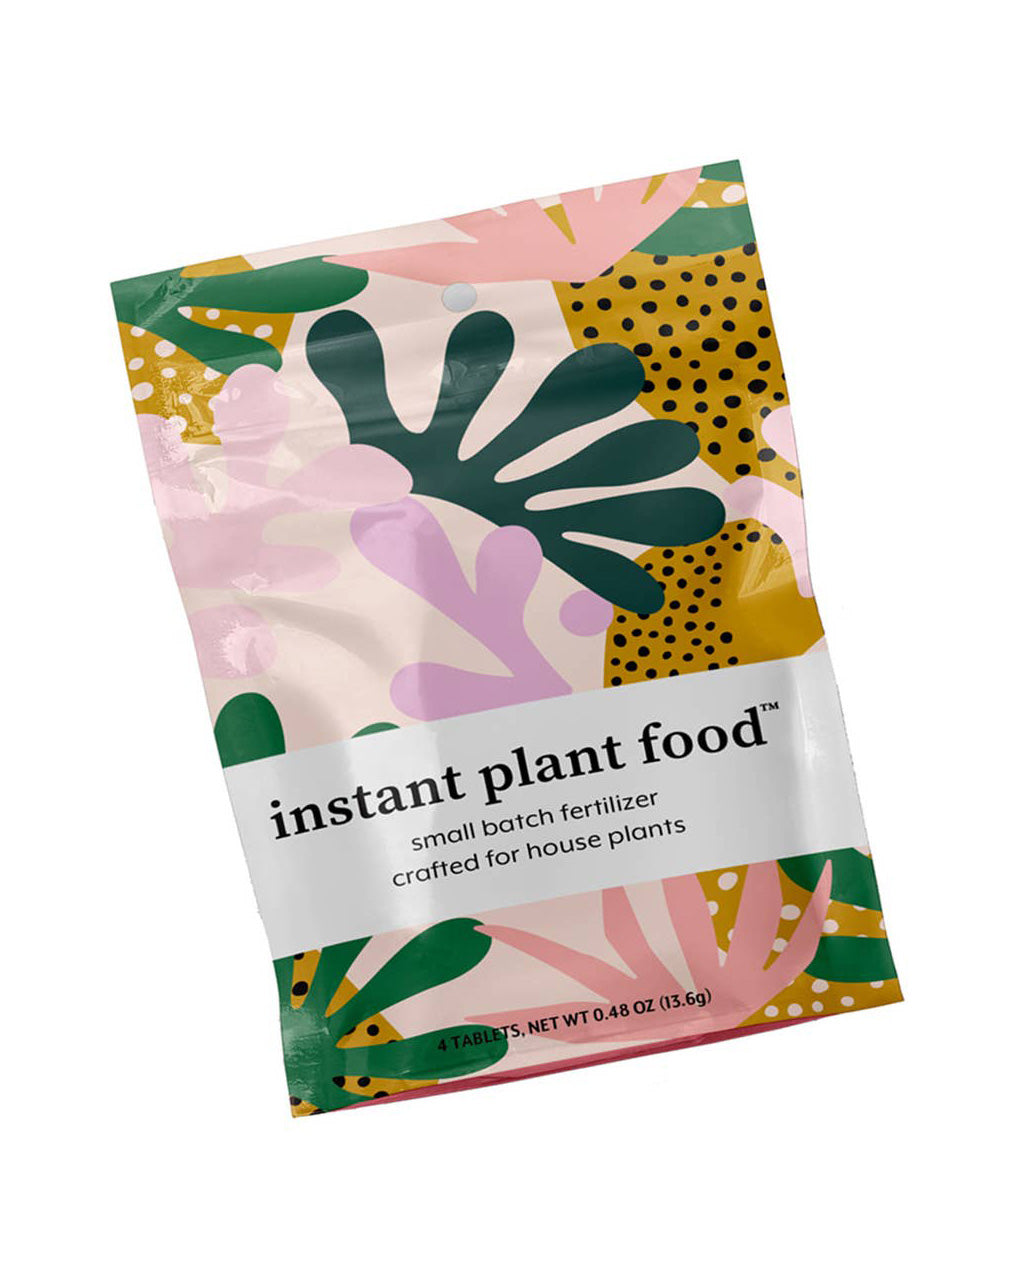 https://cdn.shopify.com/s/files/1/0787/5255/products/bando-3p-instant-plant-food-01.jpg?v=1634668862